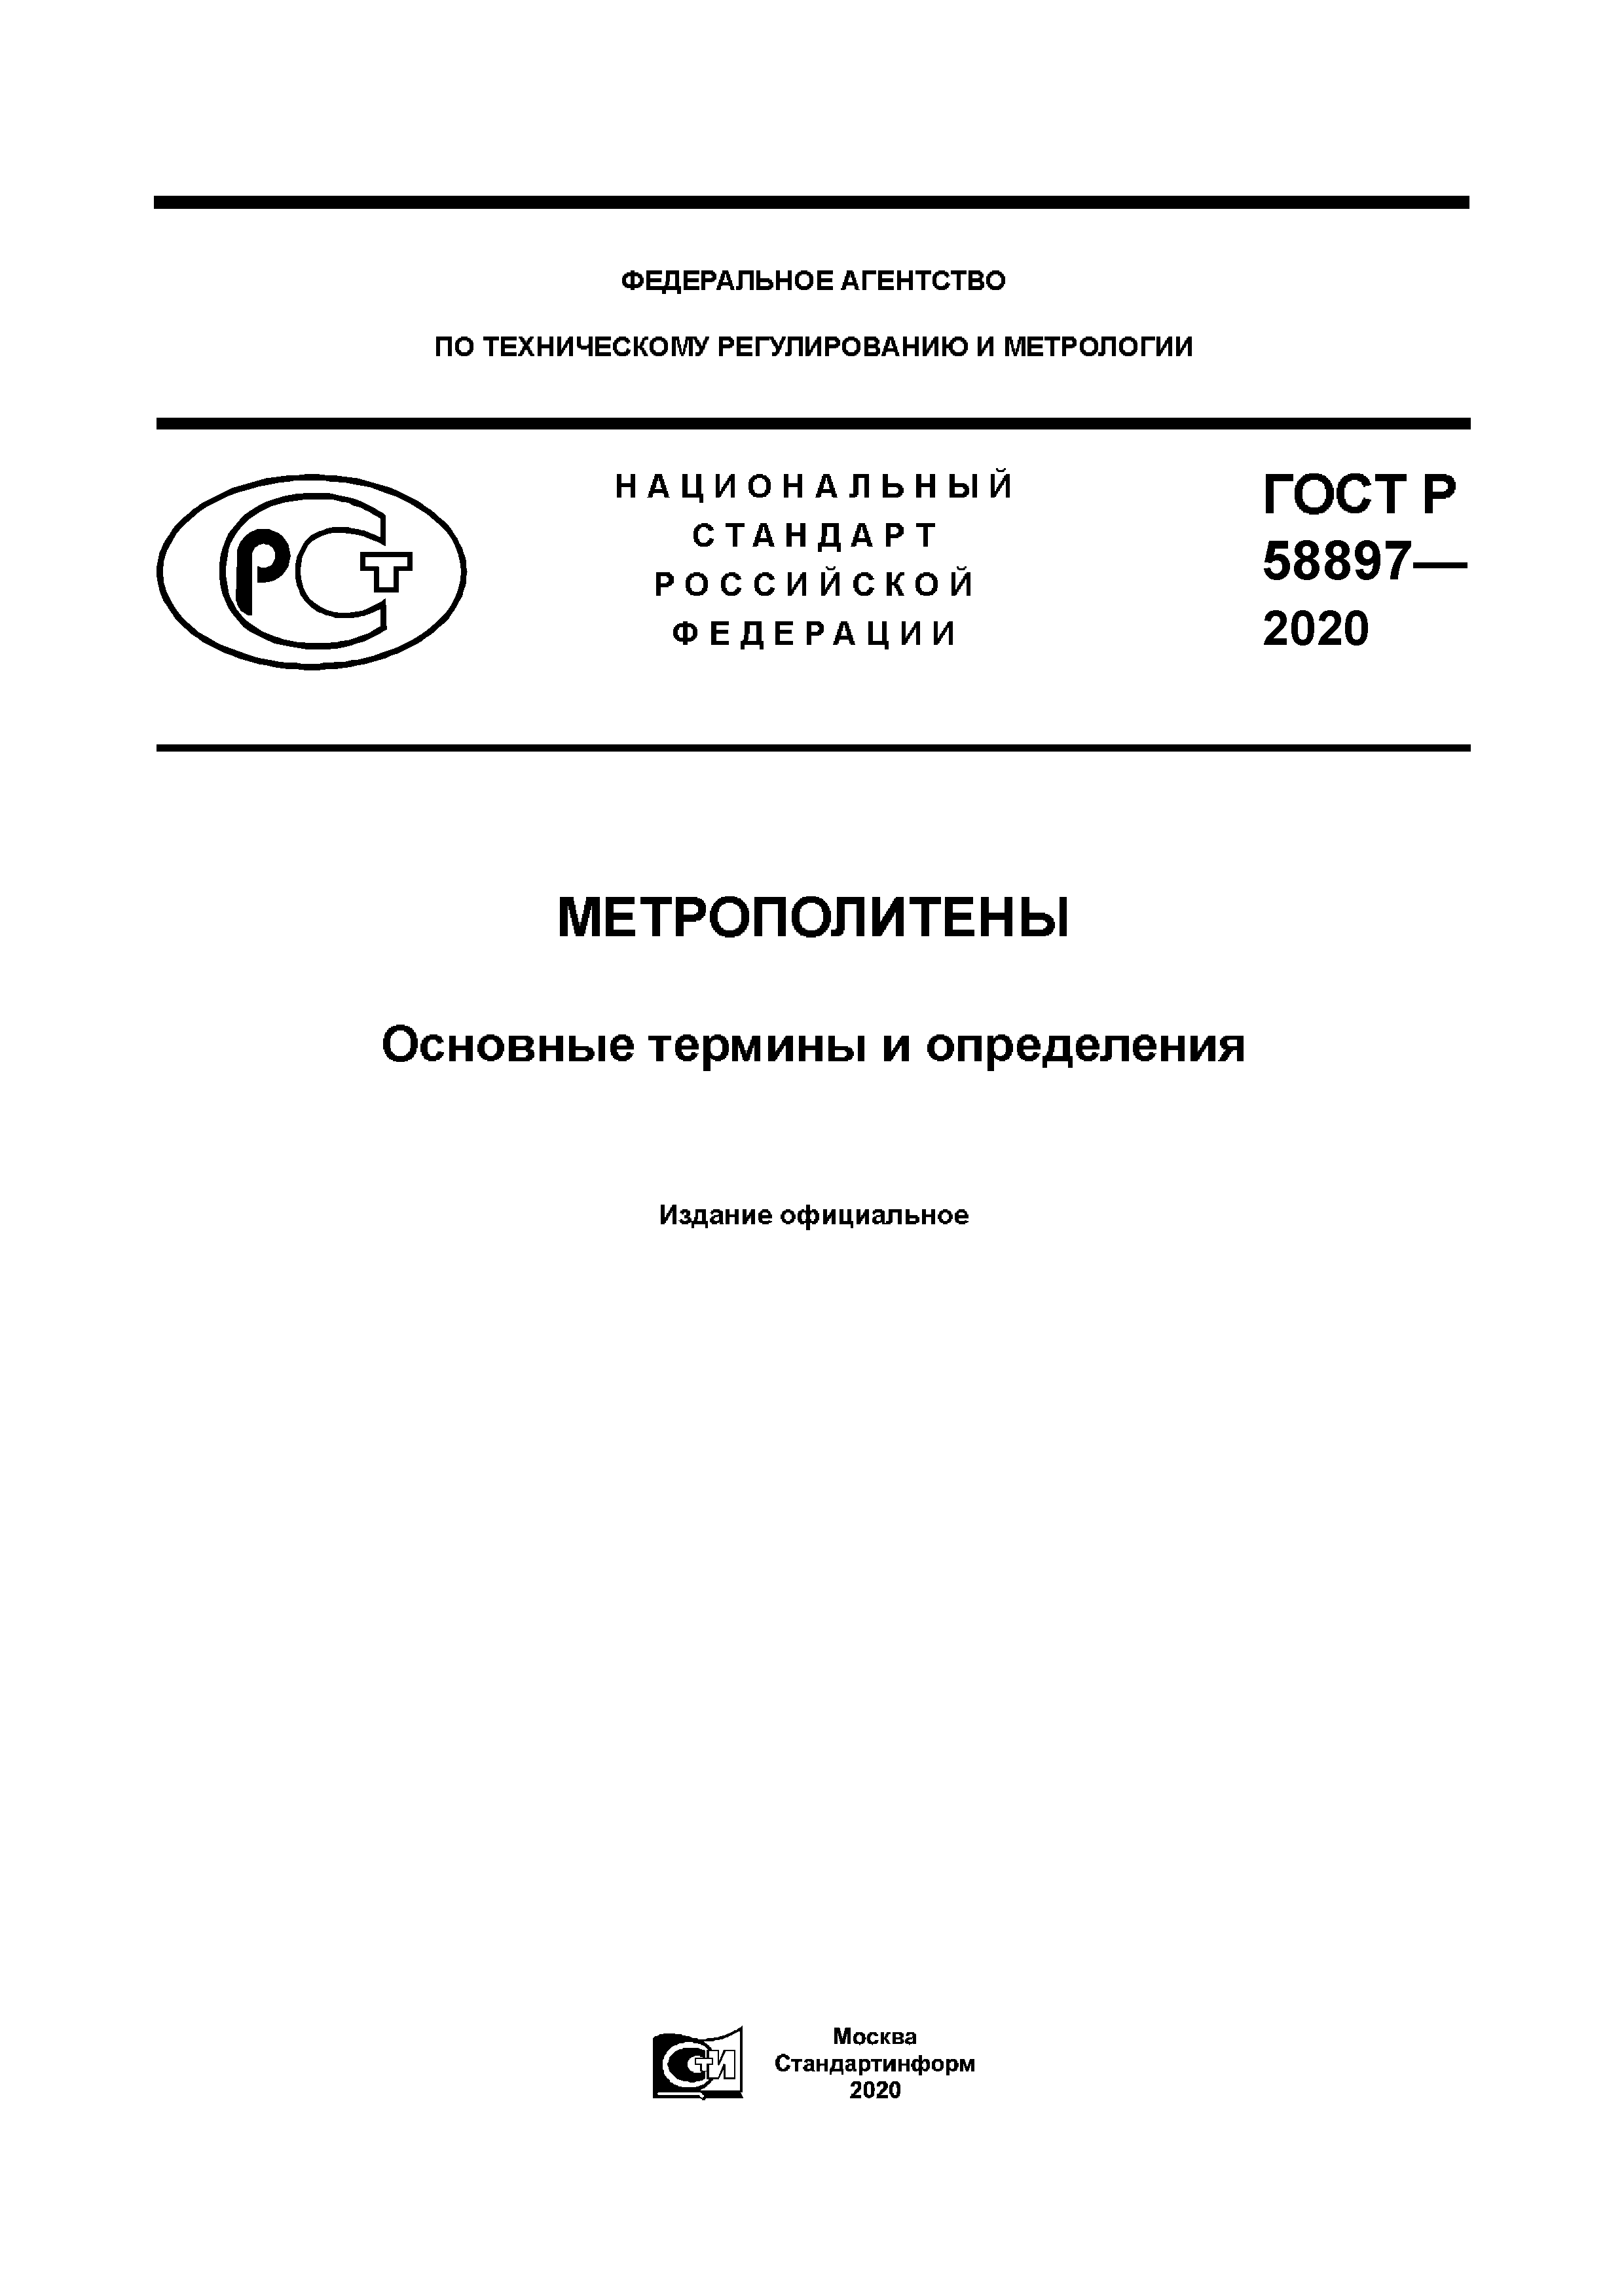 ГОСТ Р 58897-2020